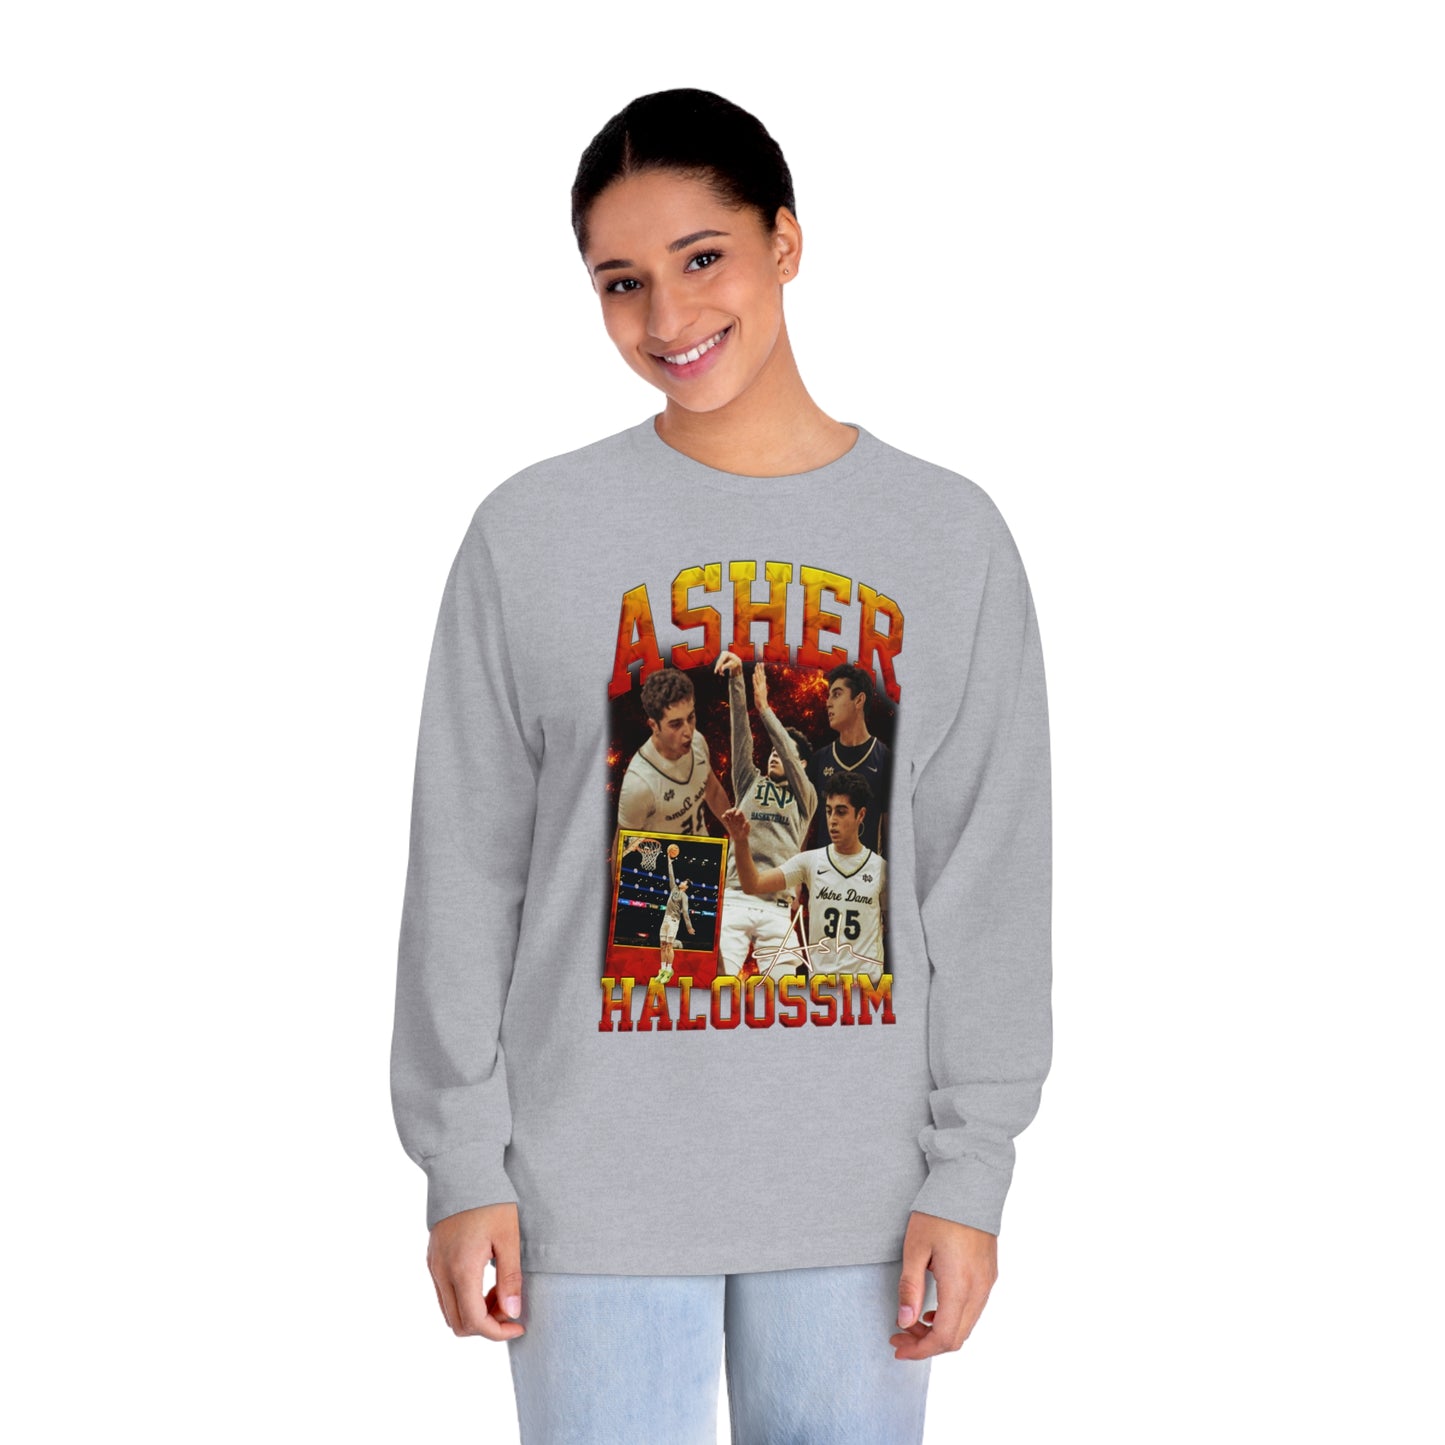 Asher Haloossim Classic Long Sleeve T-Shirt